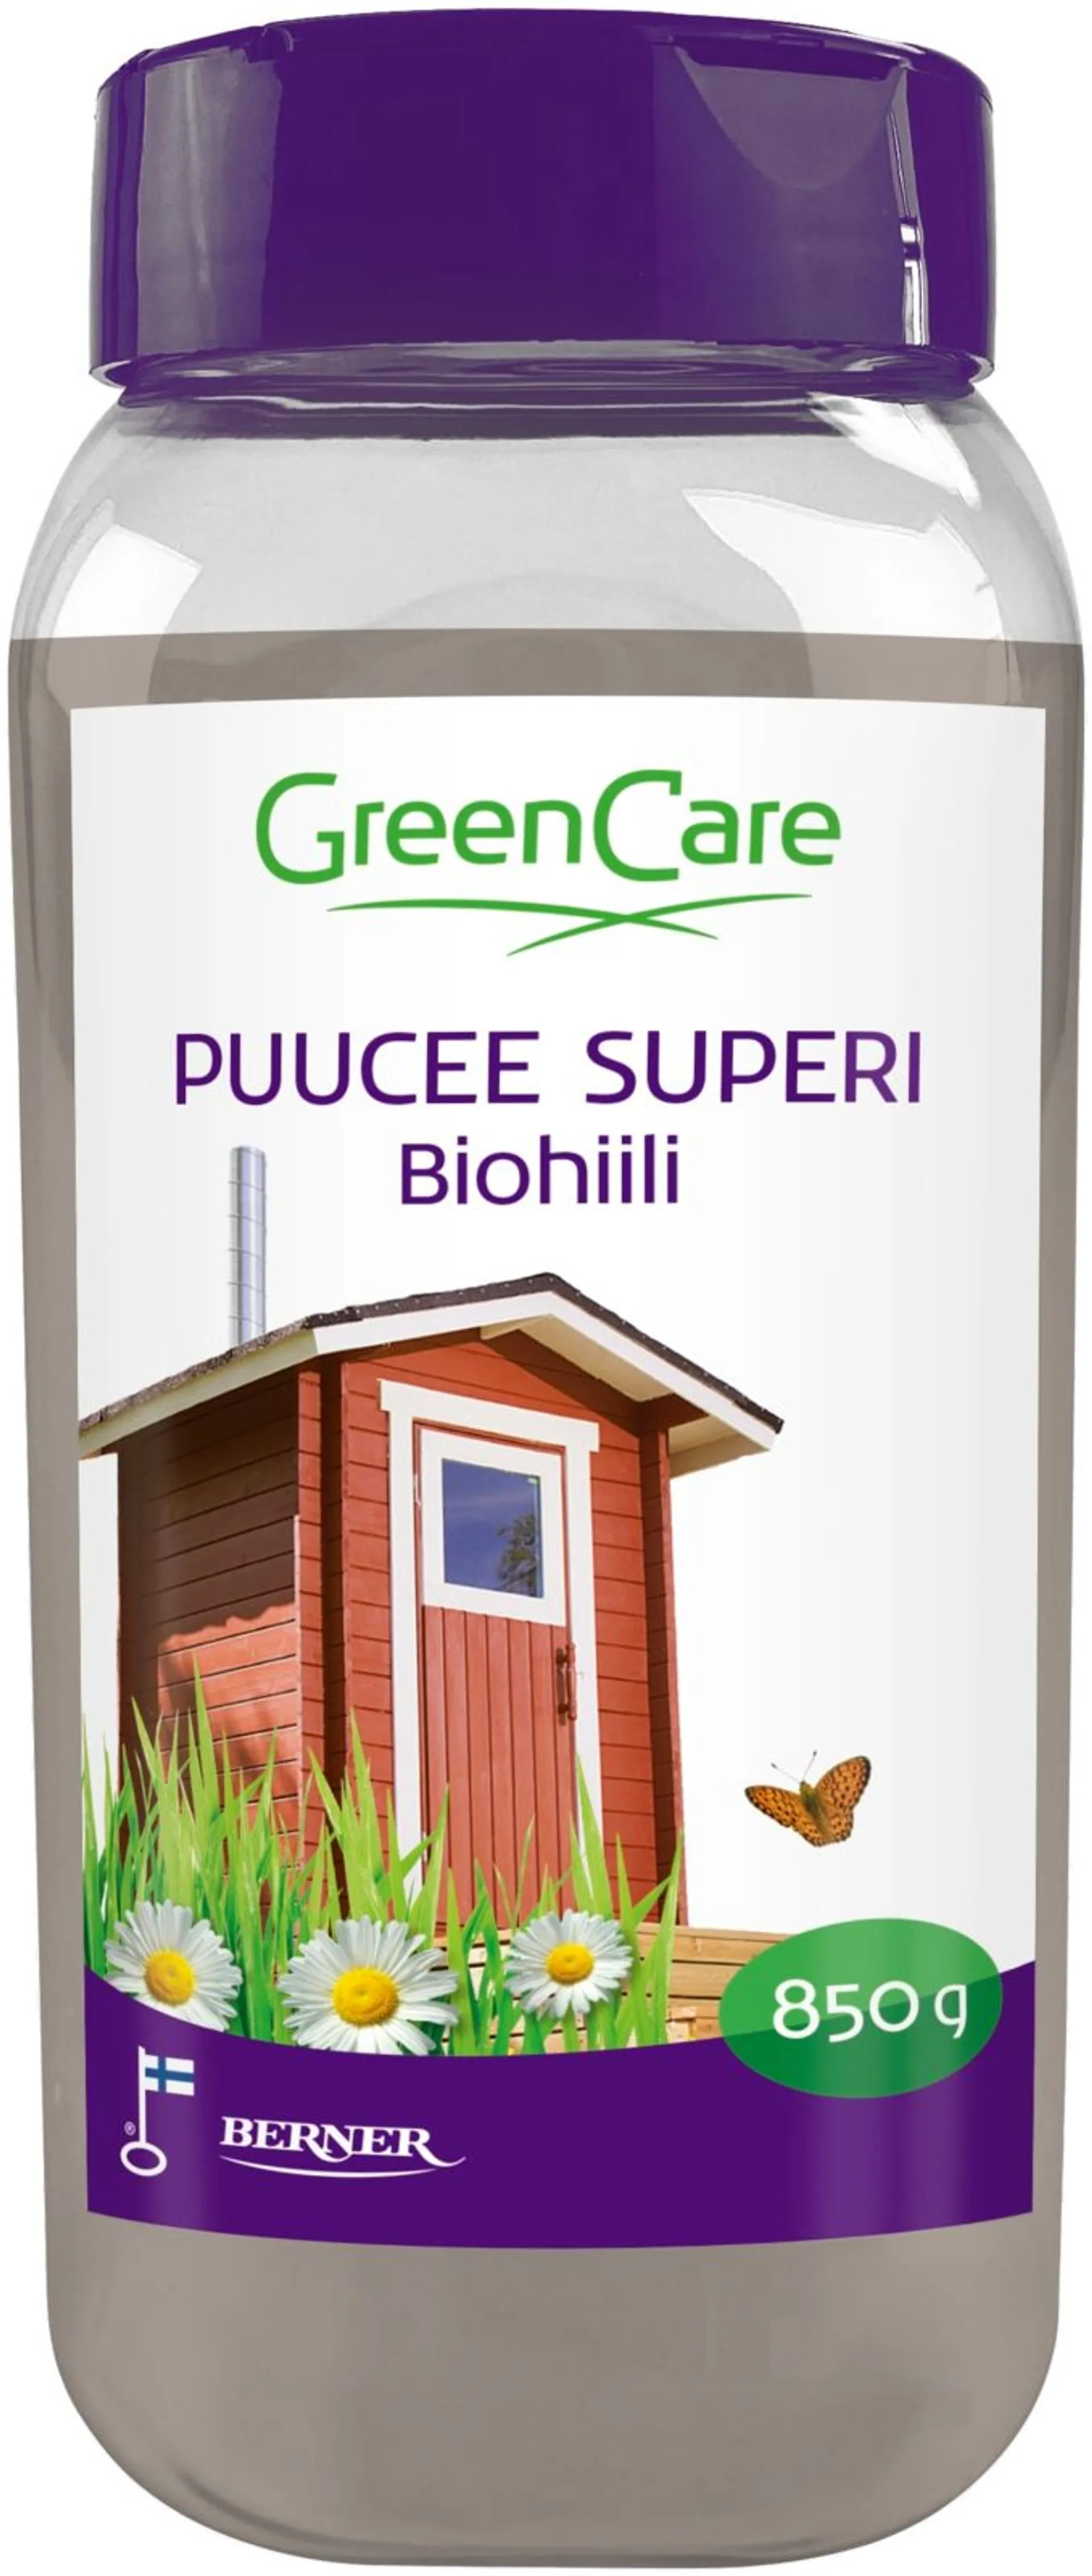 Greencare puucee superi biohiili 850 g